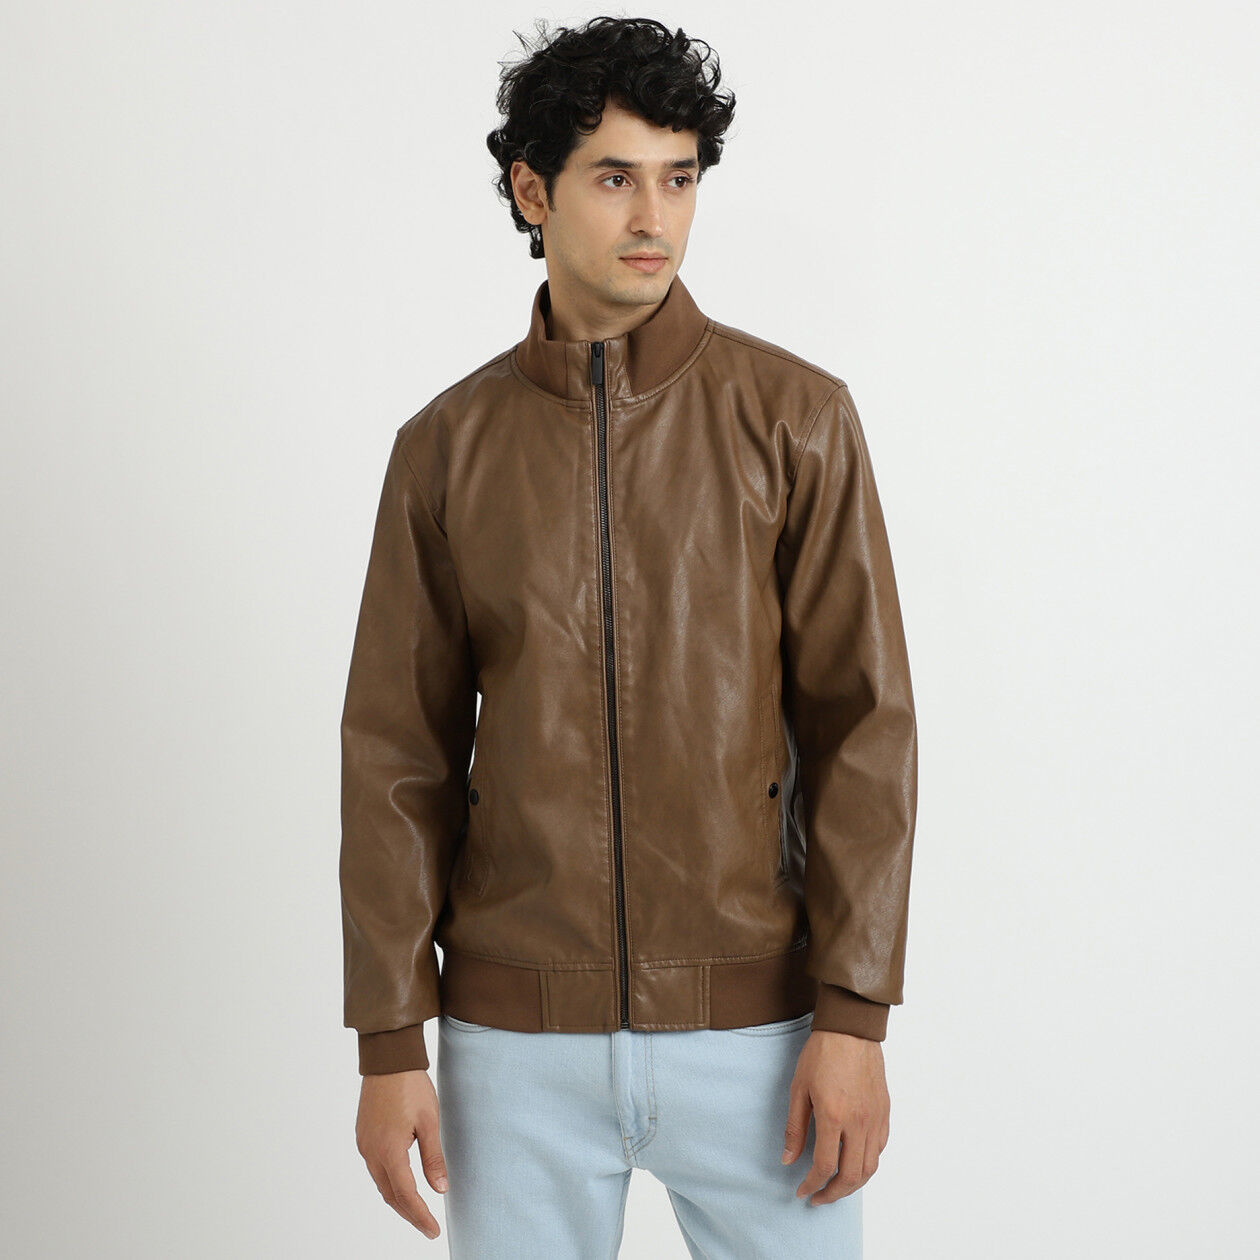 File:Chamois leather jacket.jpg - Wikimedia Commons